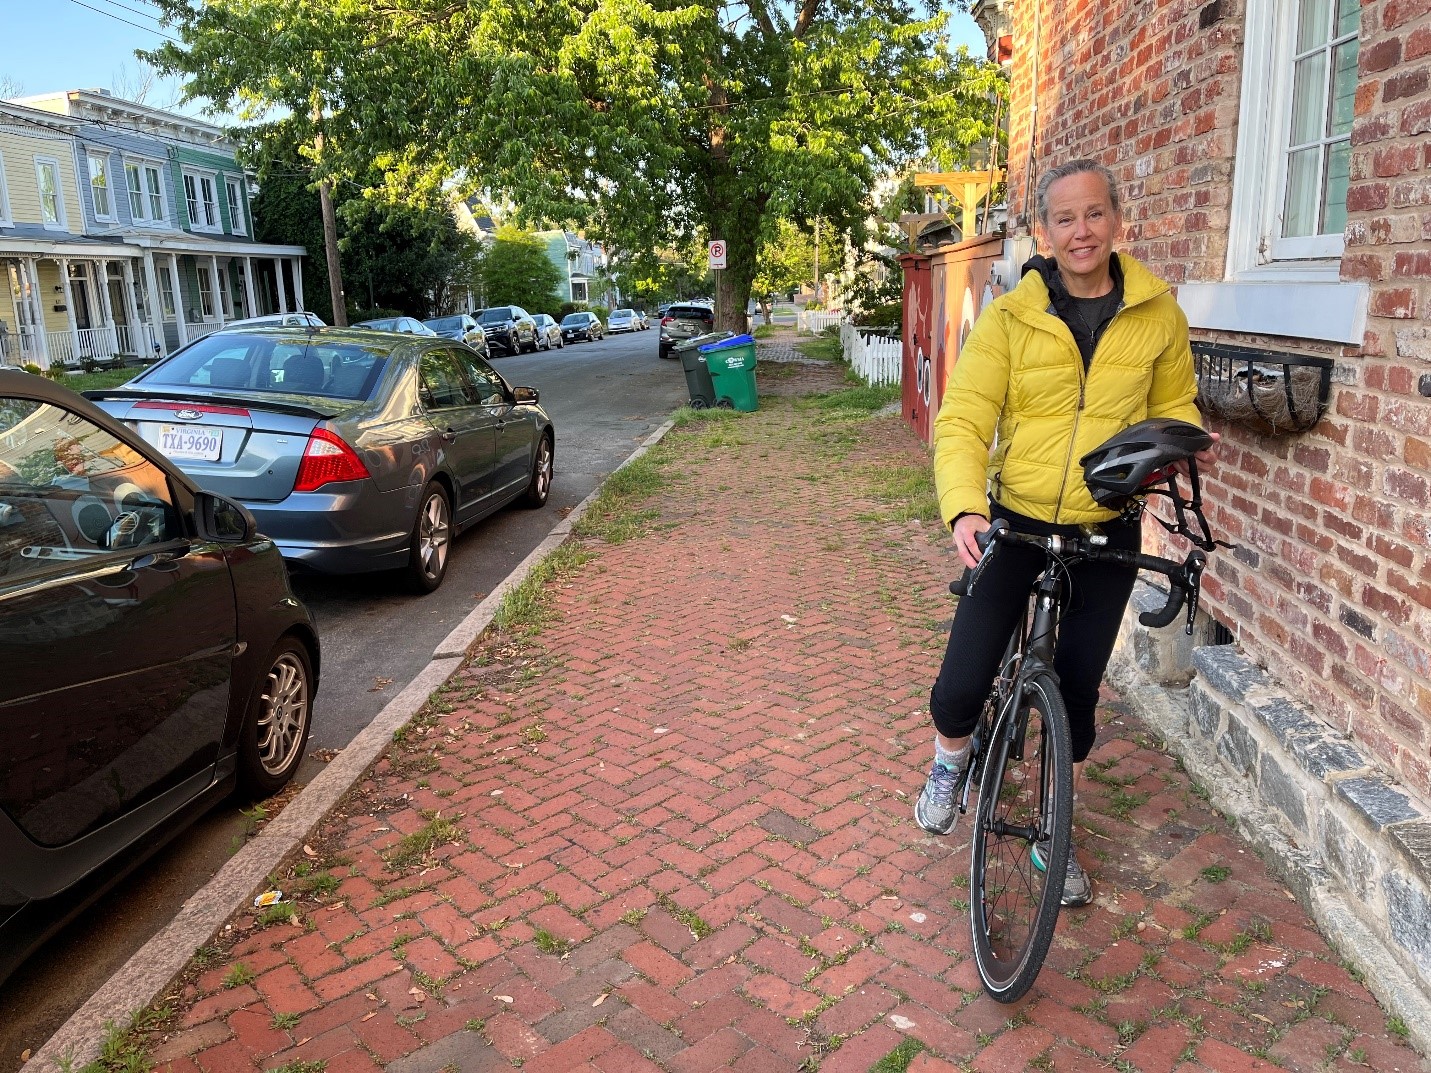 CHoR researcher Elizabeth Olmsted on her bike